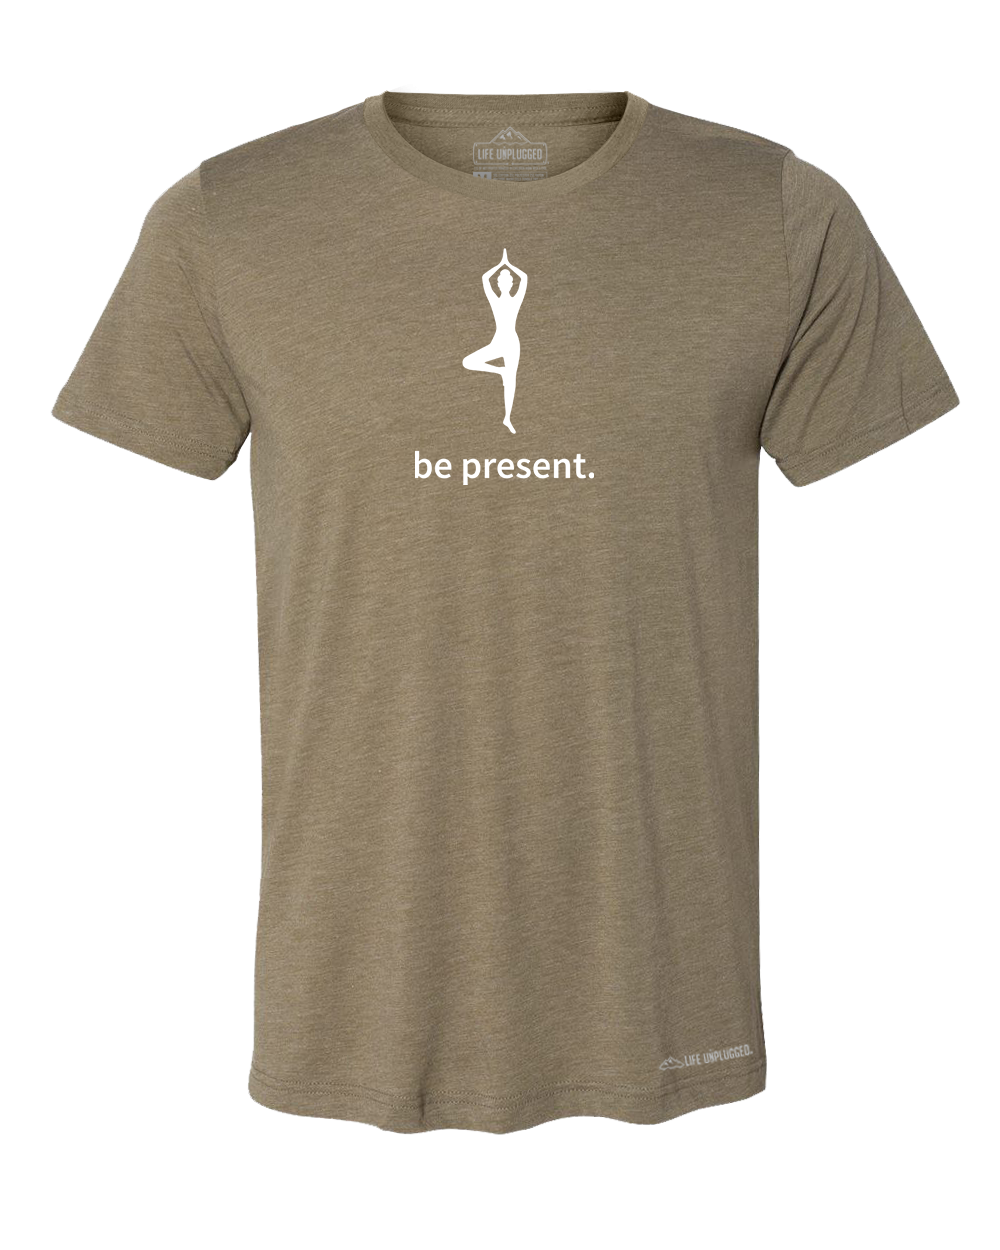 Yoga Premium Triblend T-Shirt - Life Unplugged